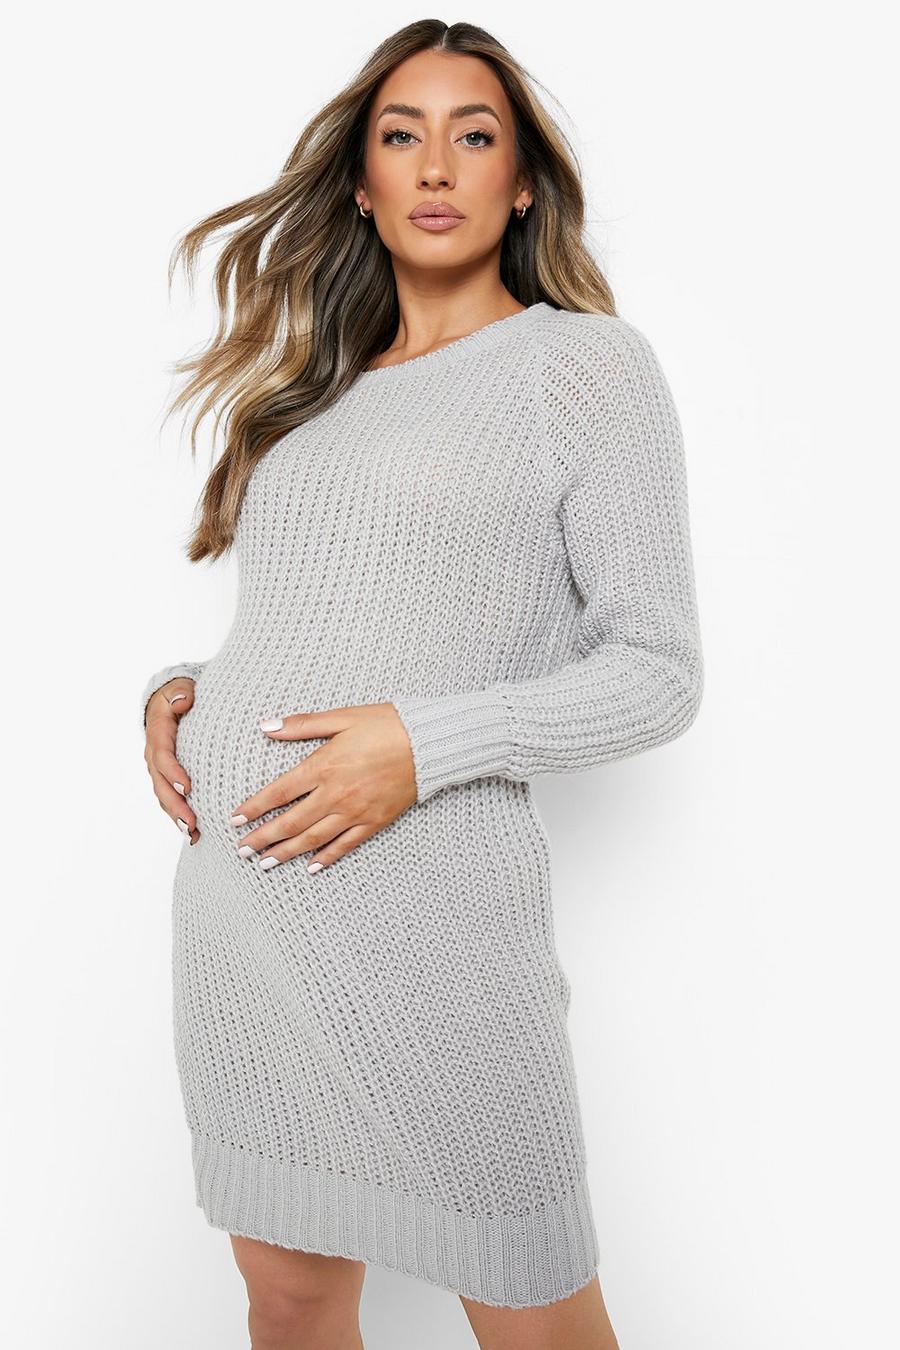 Grey marl Maternity Soft Knit Sweater Dress